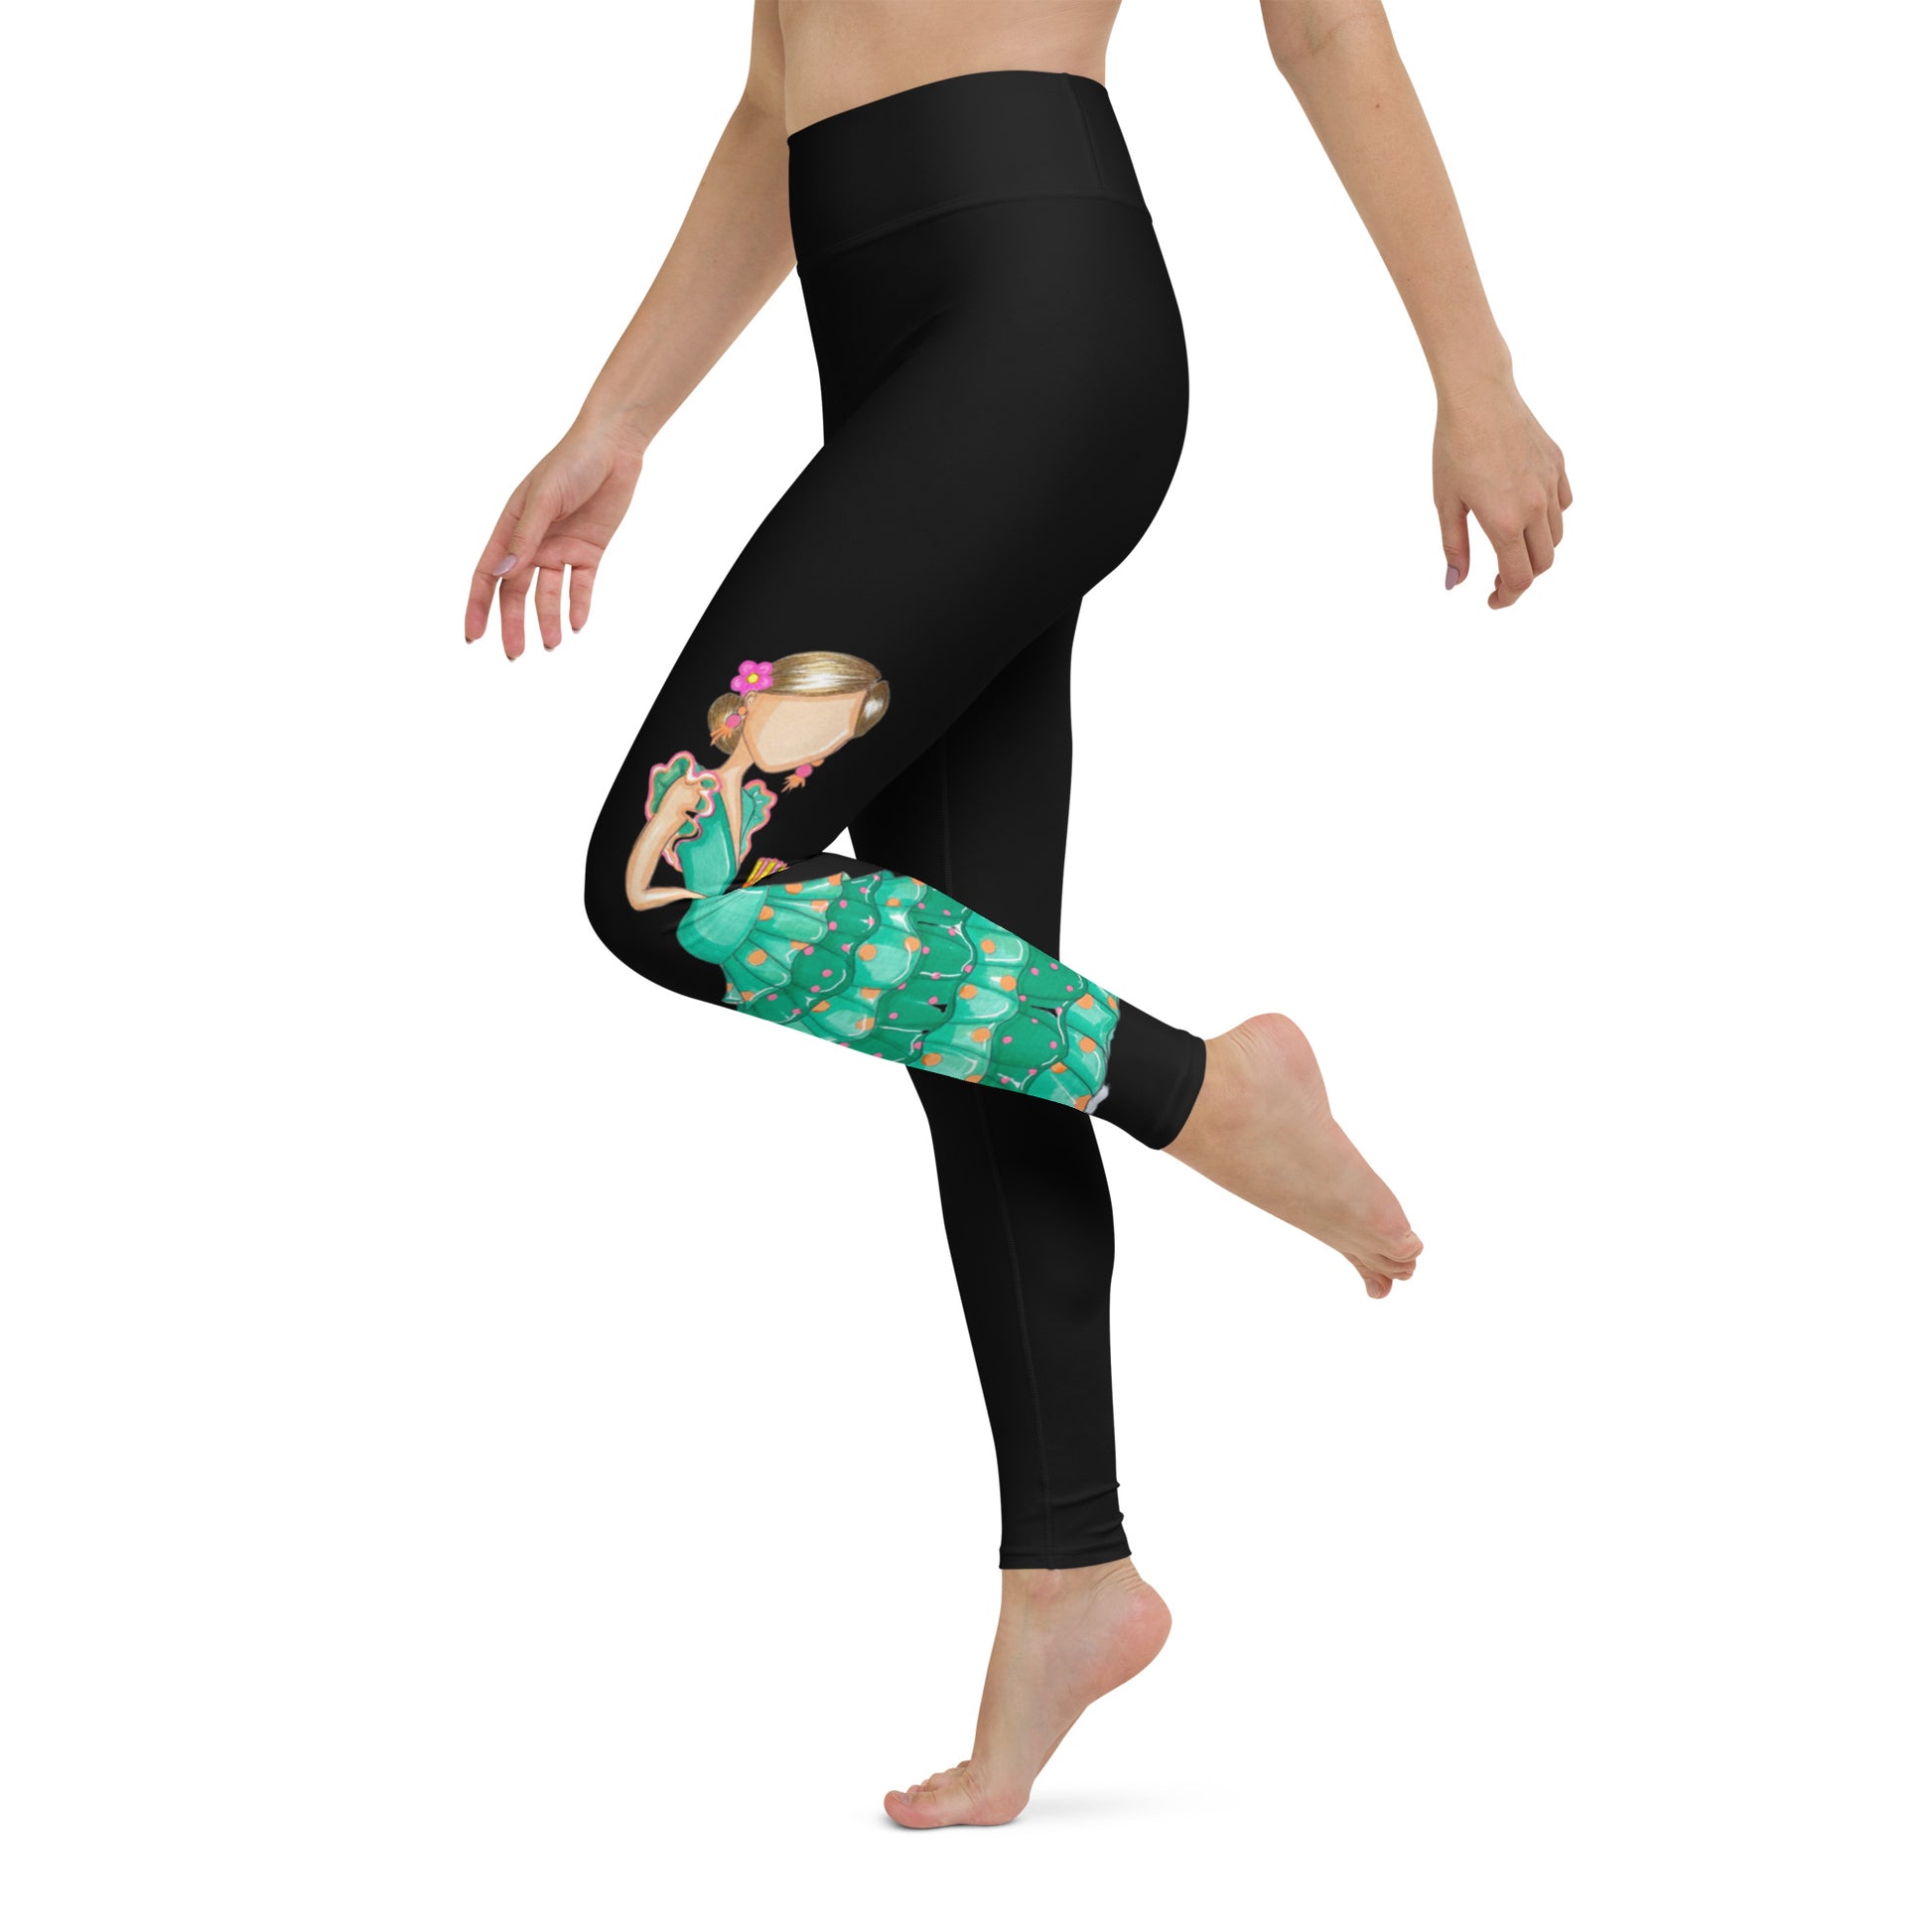 Flamenco Dancer Leggings, black high waisted yoga leggings with a green dress and a yellow flower design - IllustrArte